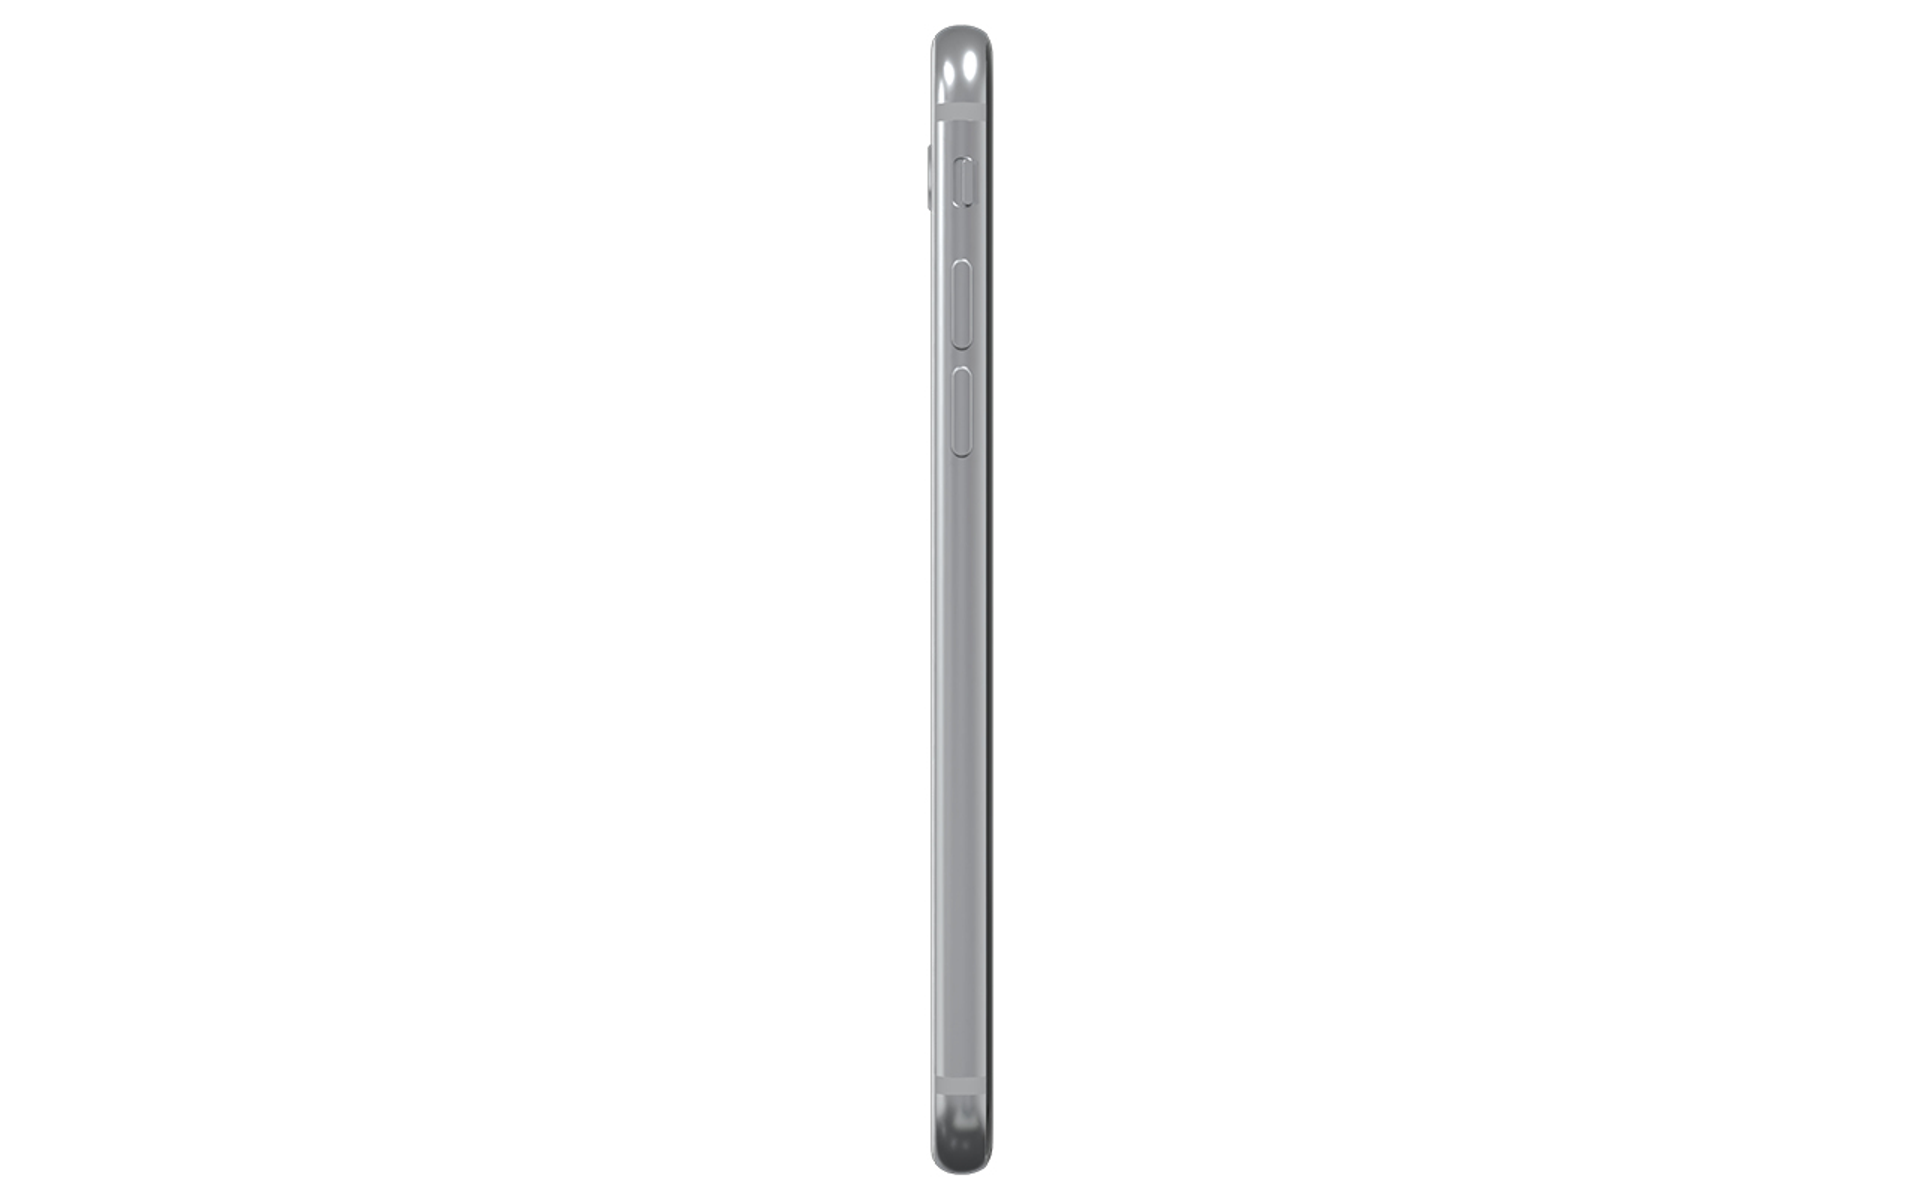 APPLE REFURBISHED(*) iPhone SE2020 SIM 64 White Dual GB